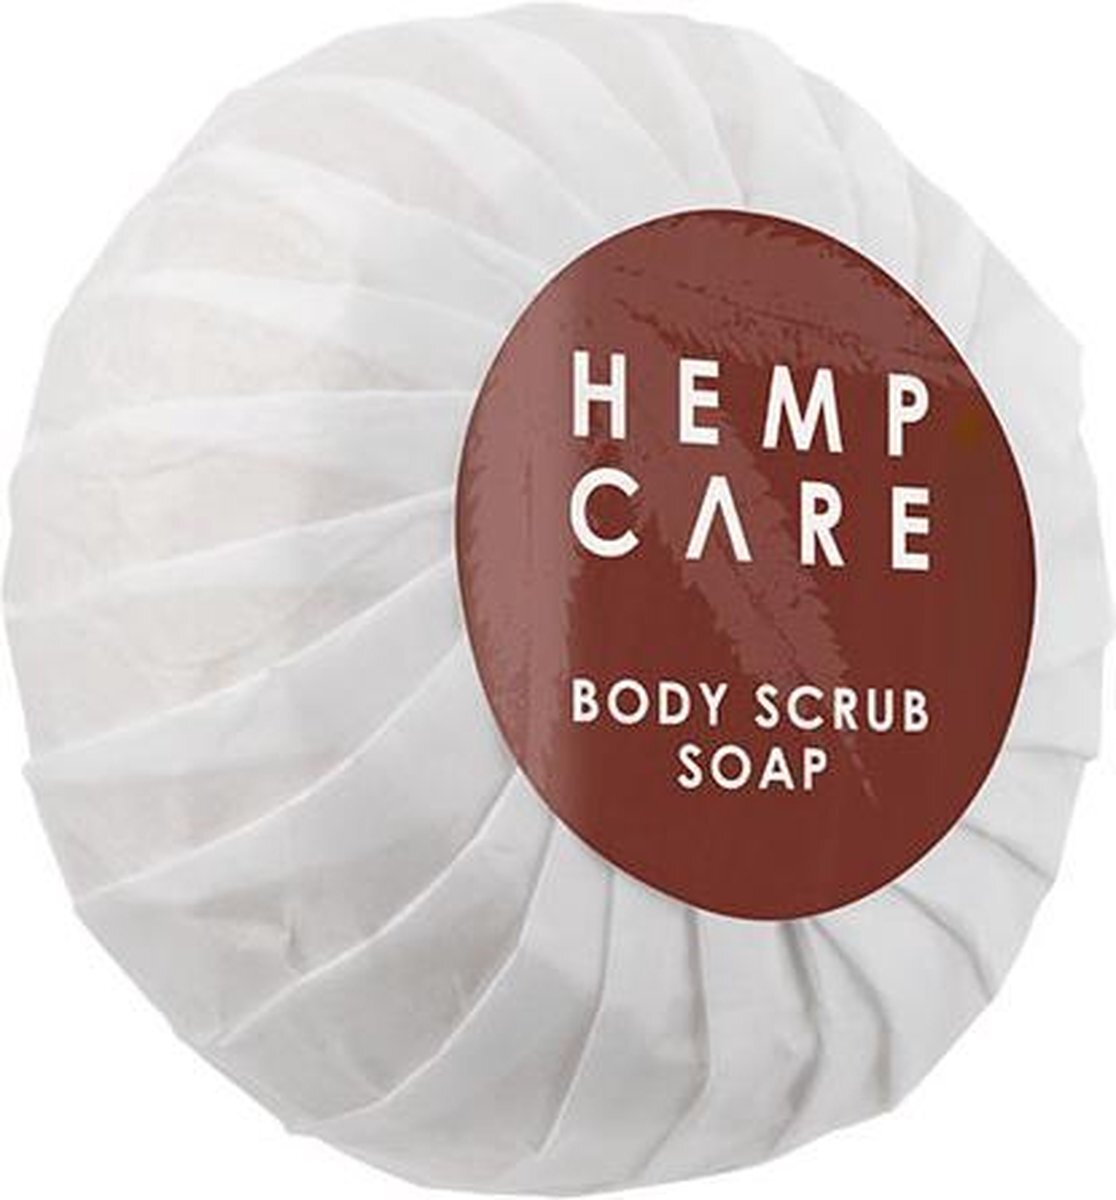 Hemp Care Body Scrub Soap